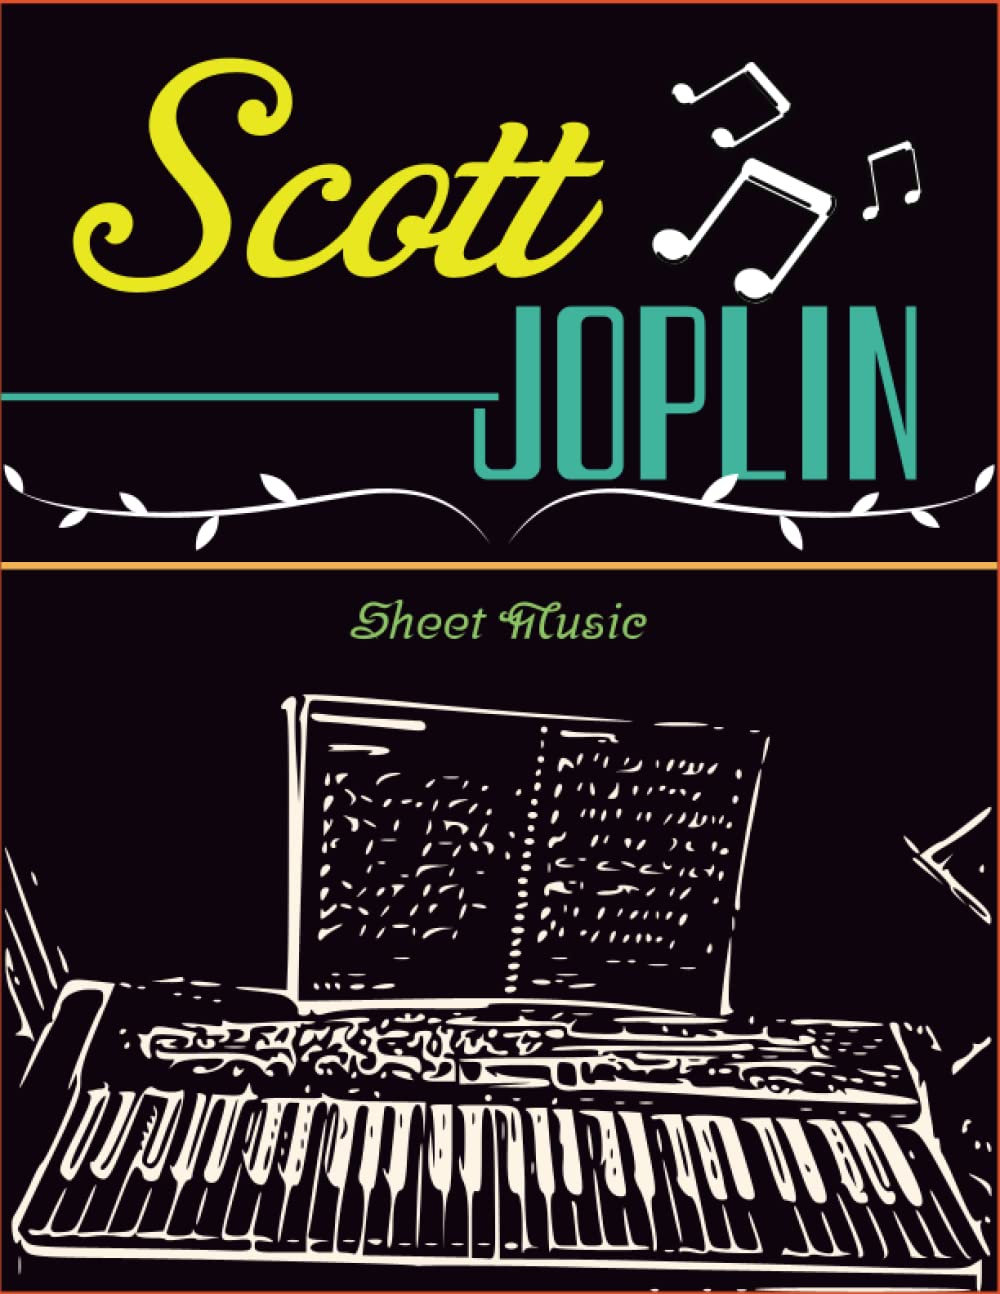 Scott Joplin Sheet Music: 25 Songs for Piano Solo( by Composer)